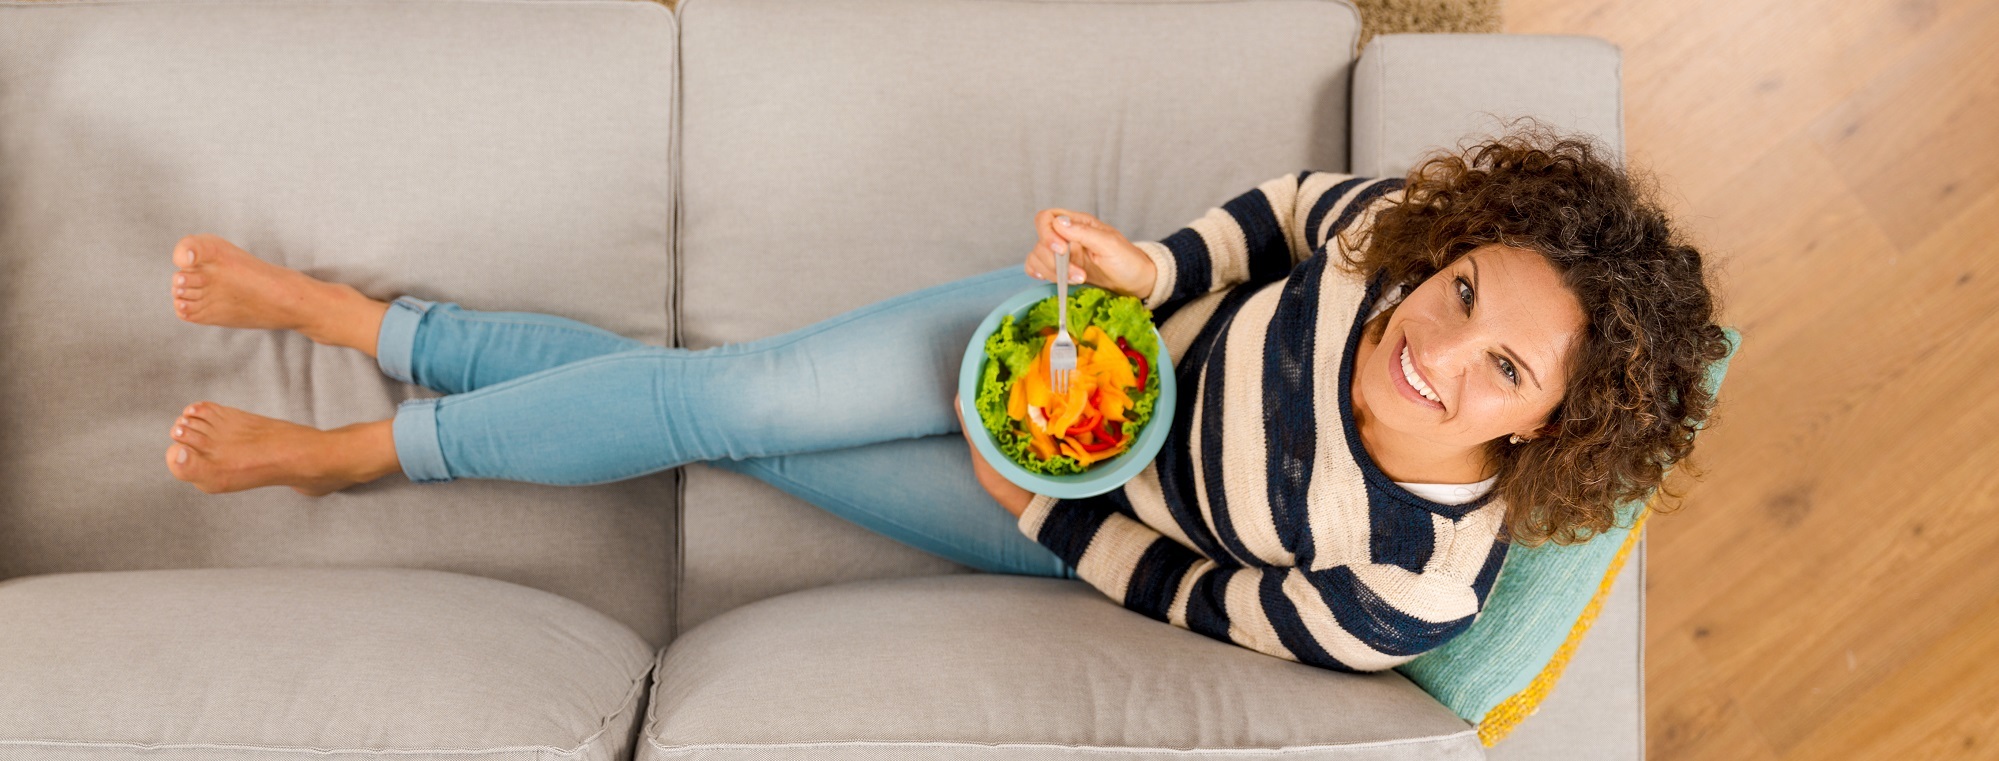 najpopularnije dijete, prednosti i mane | dijeta i nutricionizam, zdravlje i prevencija, magazin